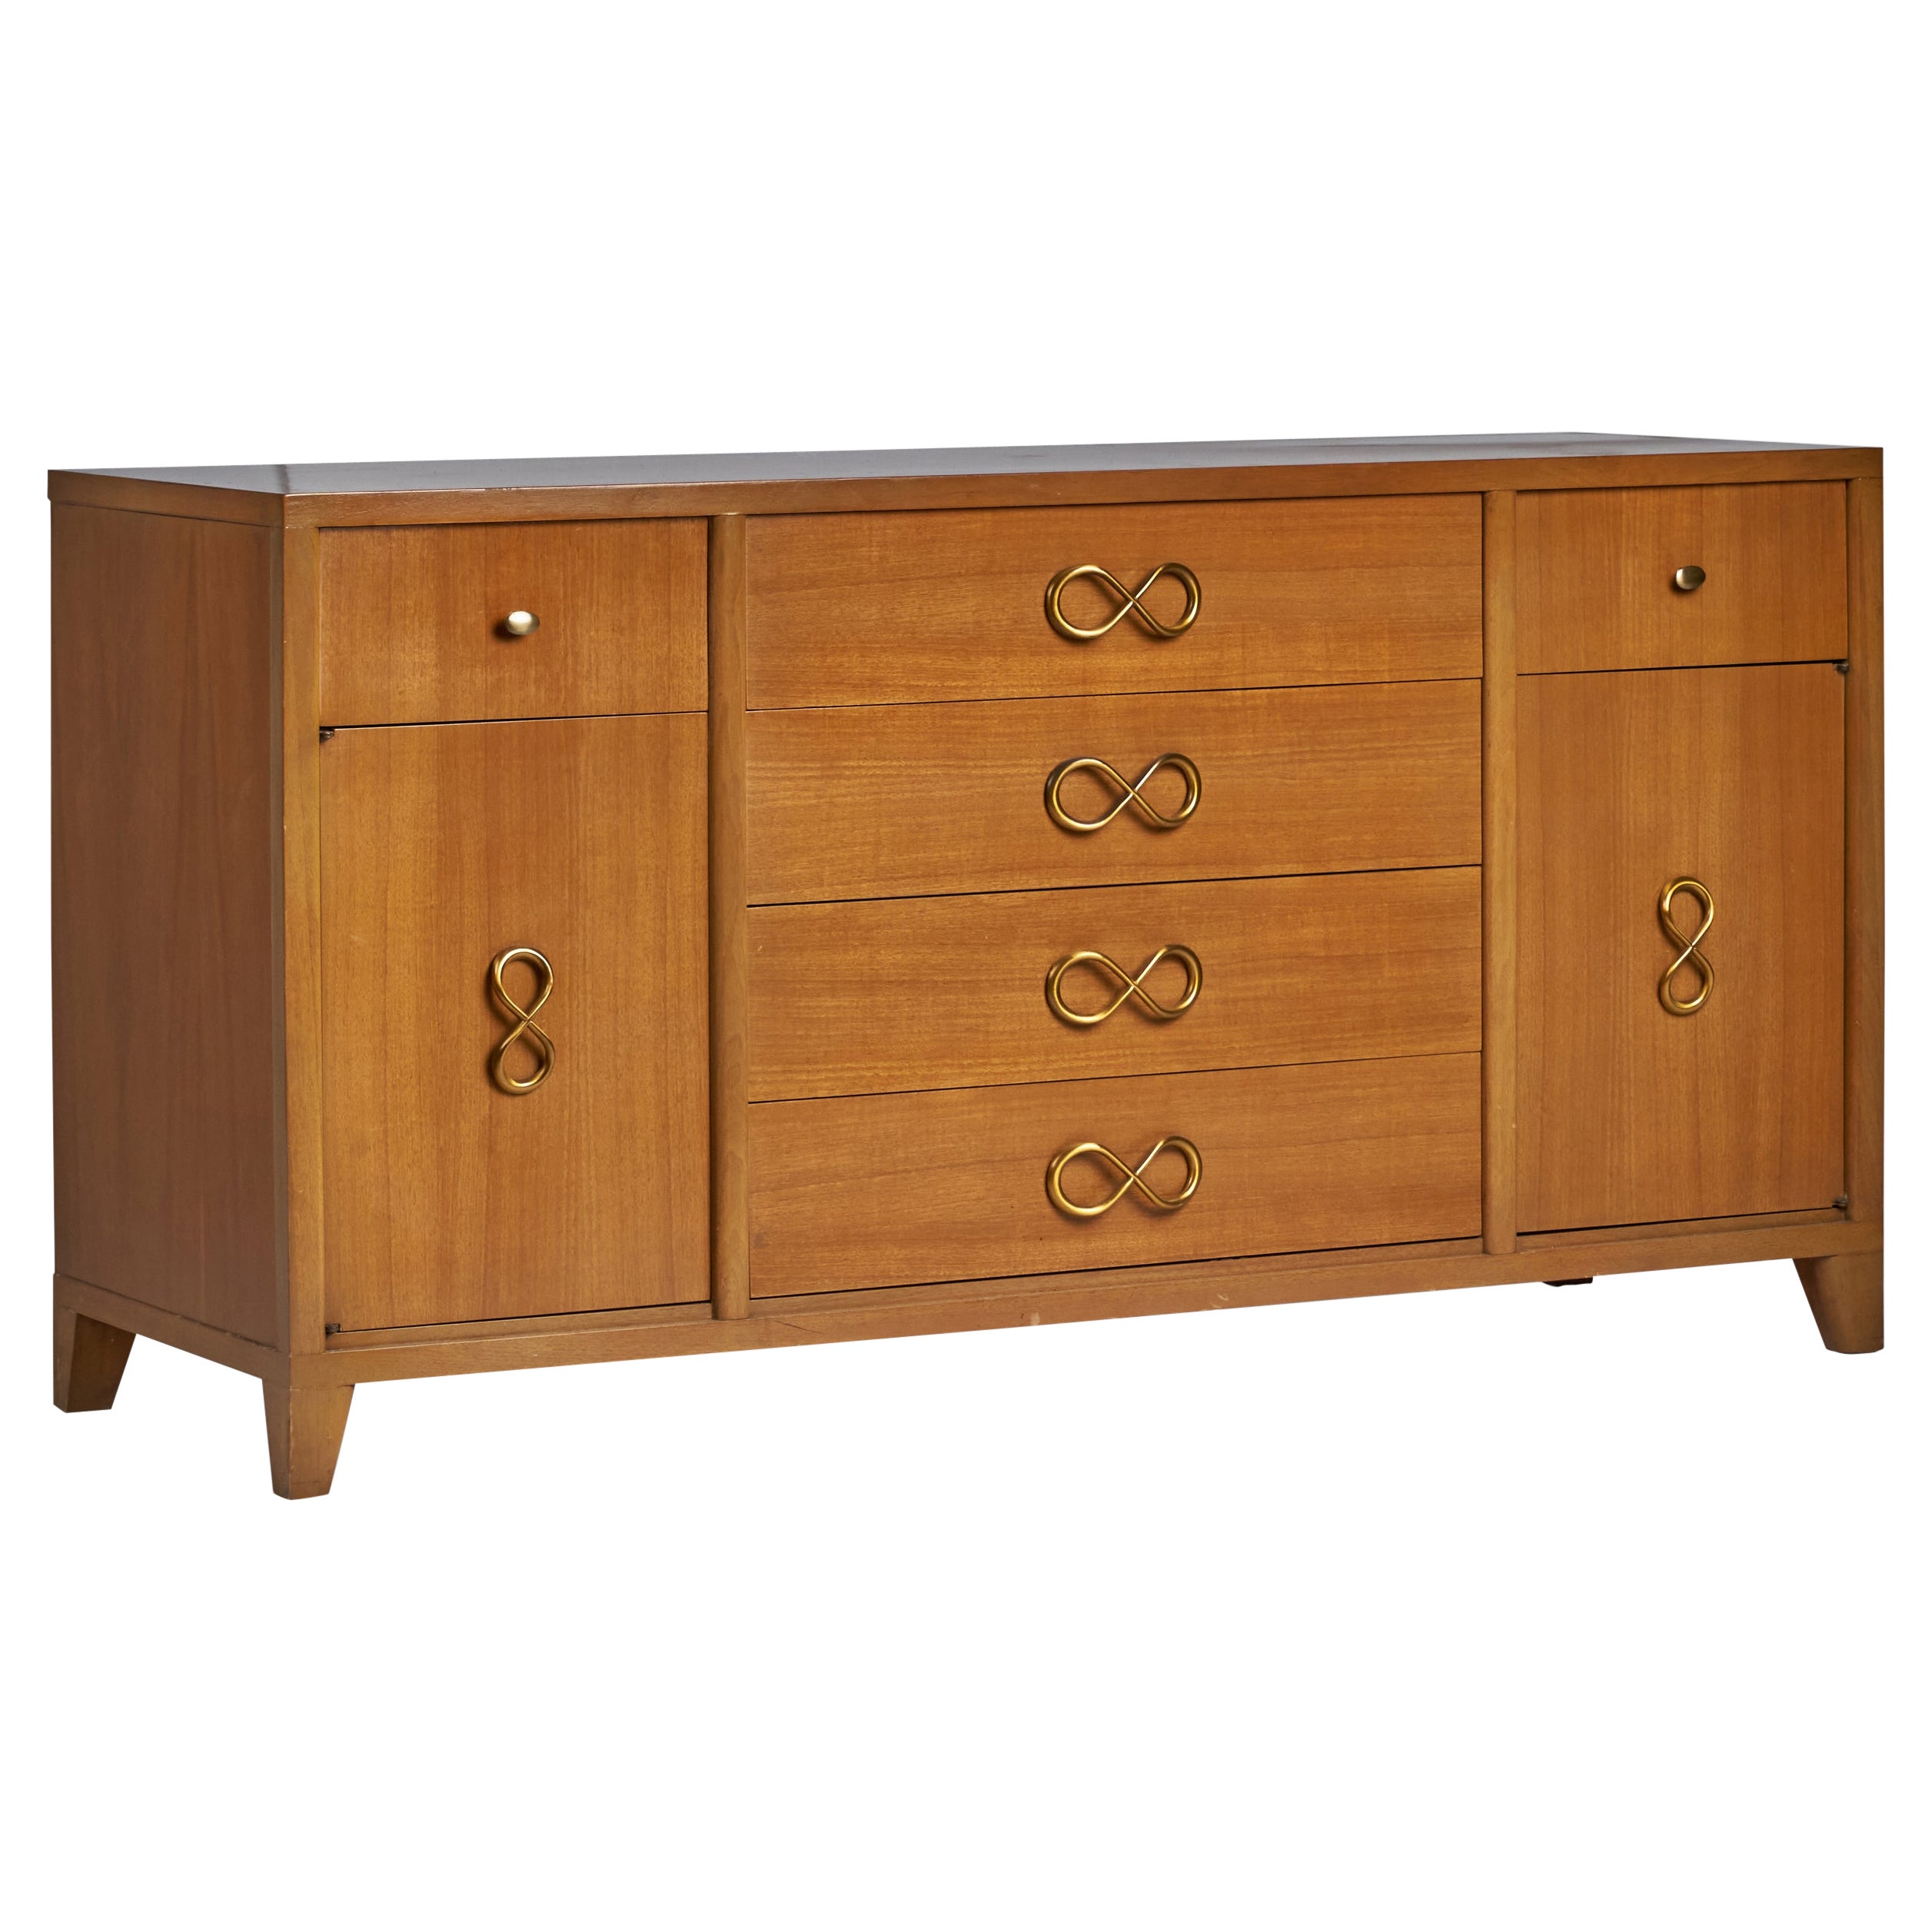 Red Lion Furniture, Cabinet, Walnut, Brass, USA, 1940s